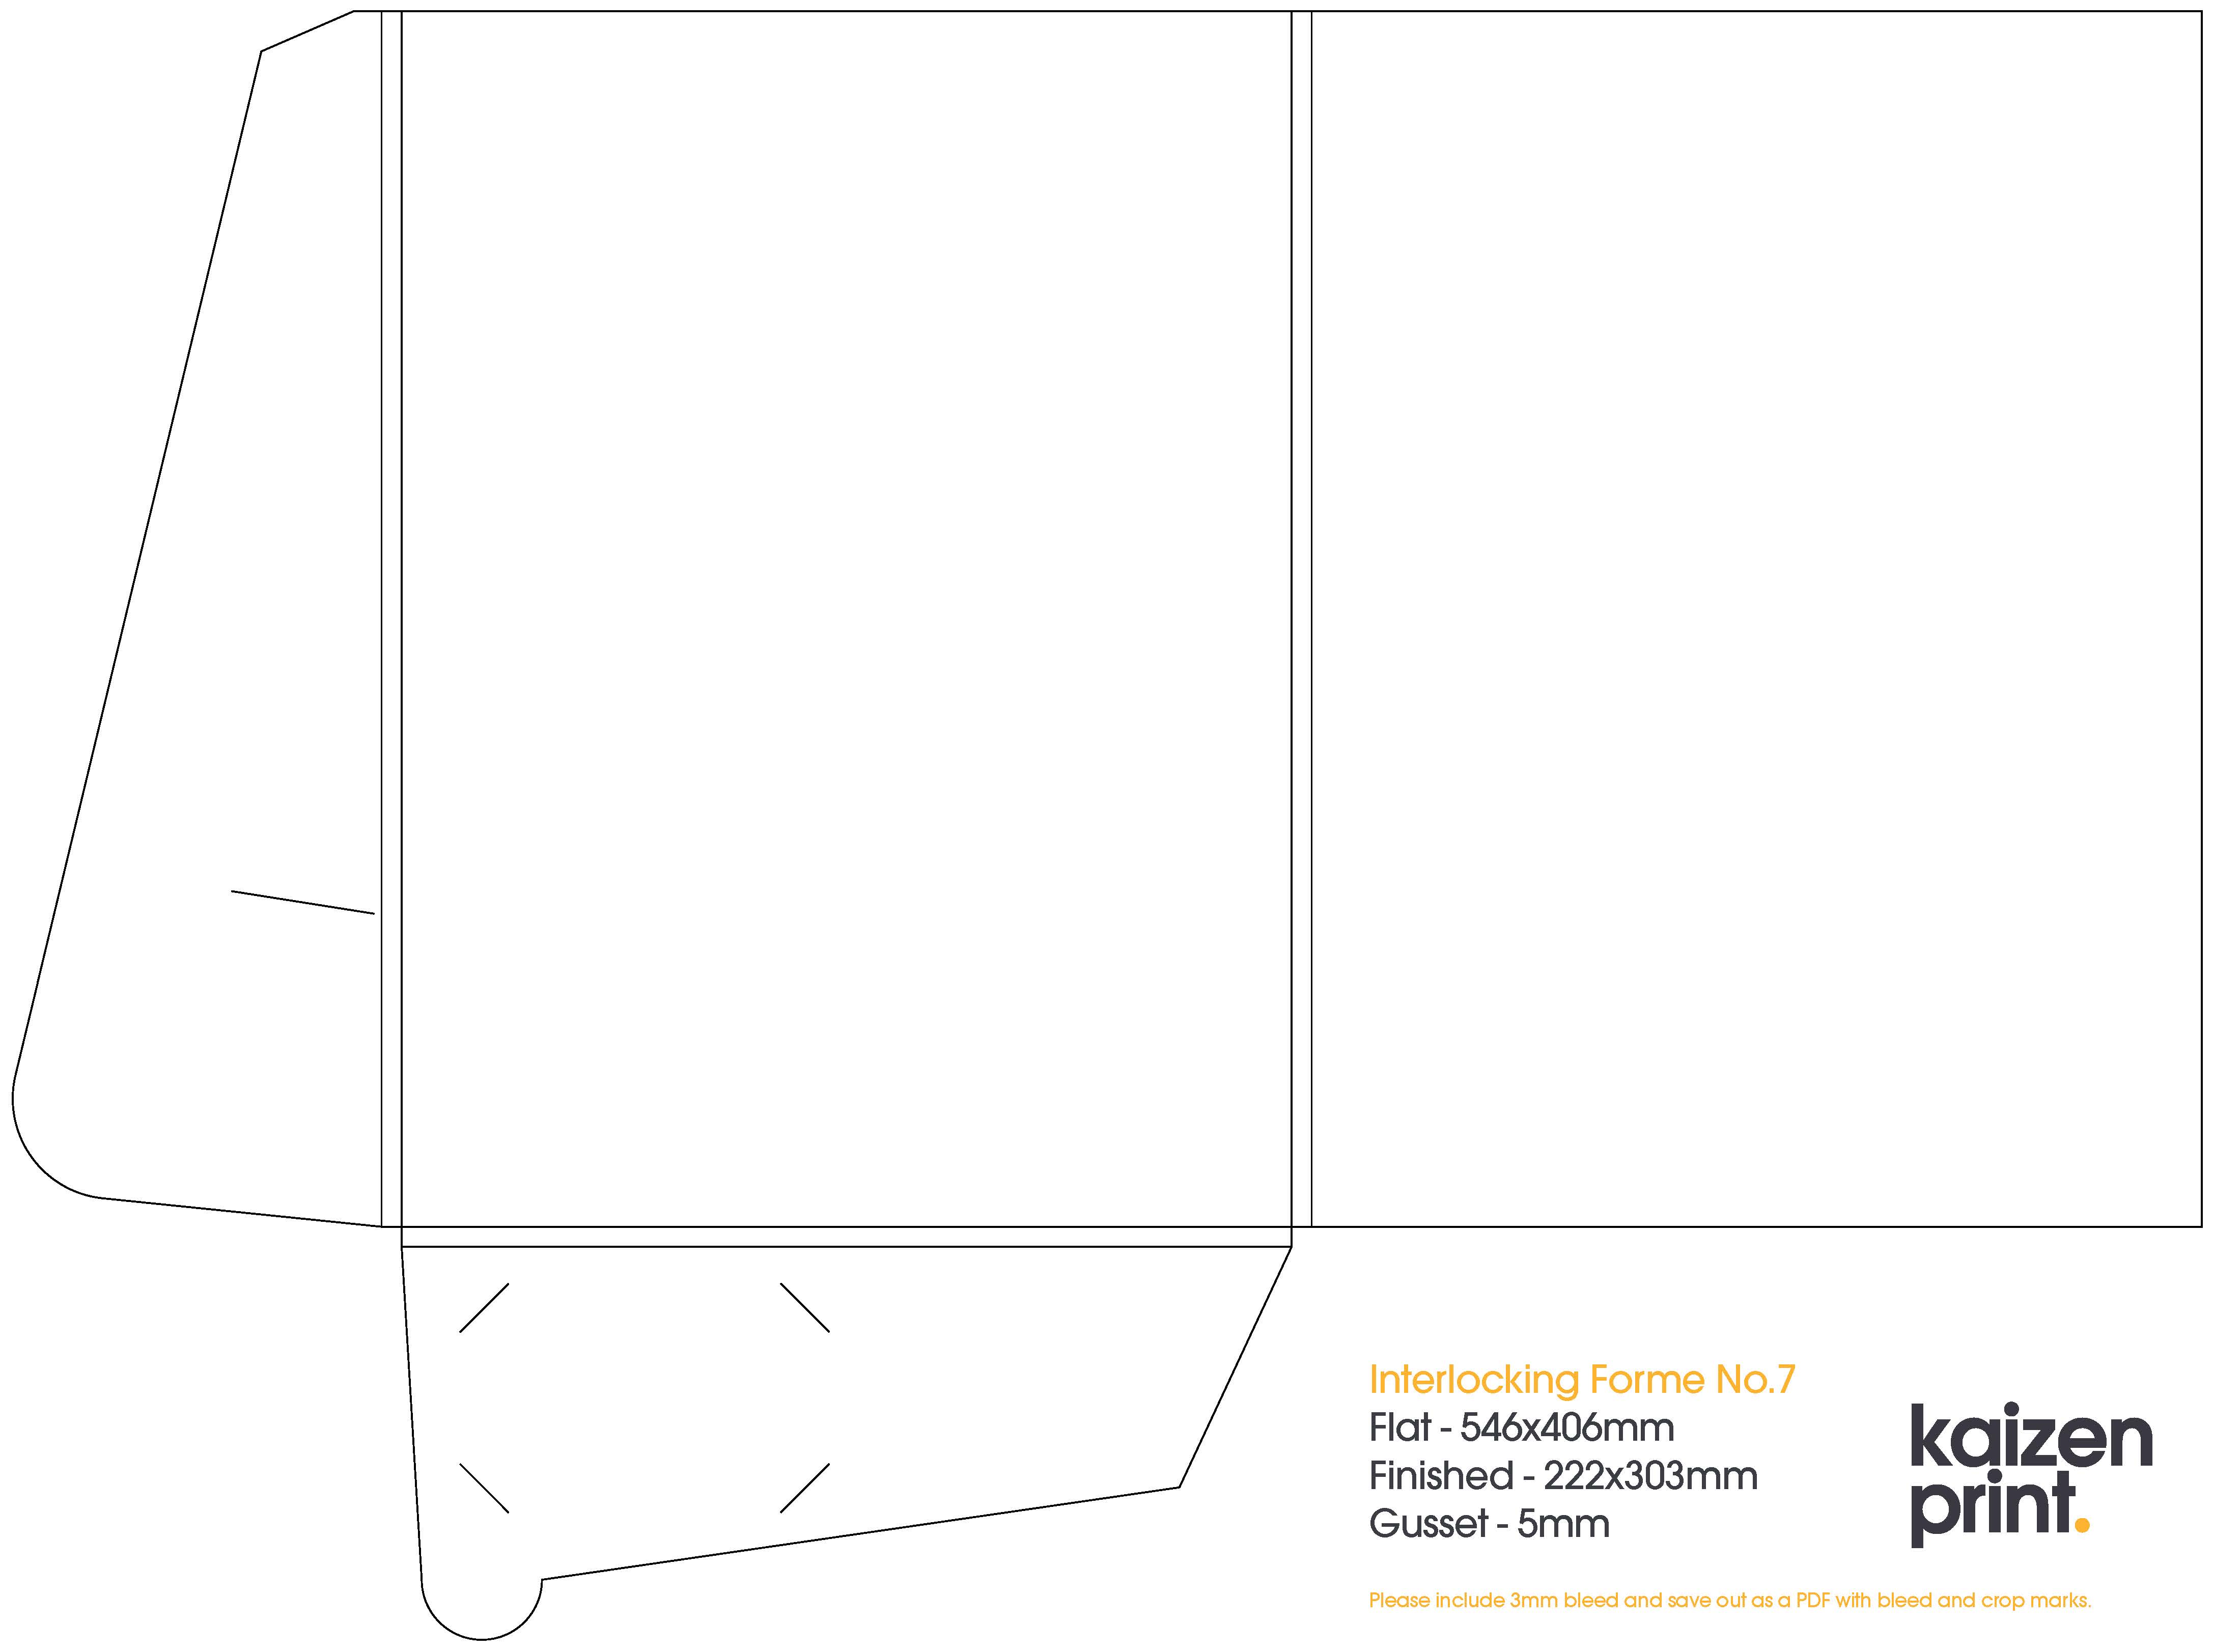 ambition Politistation Enig med Printing perfect presentation folders - Kaizen Print - Inspire & Support